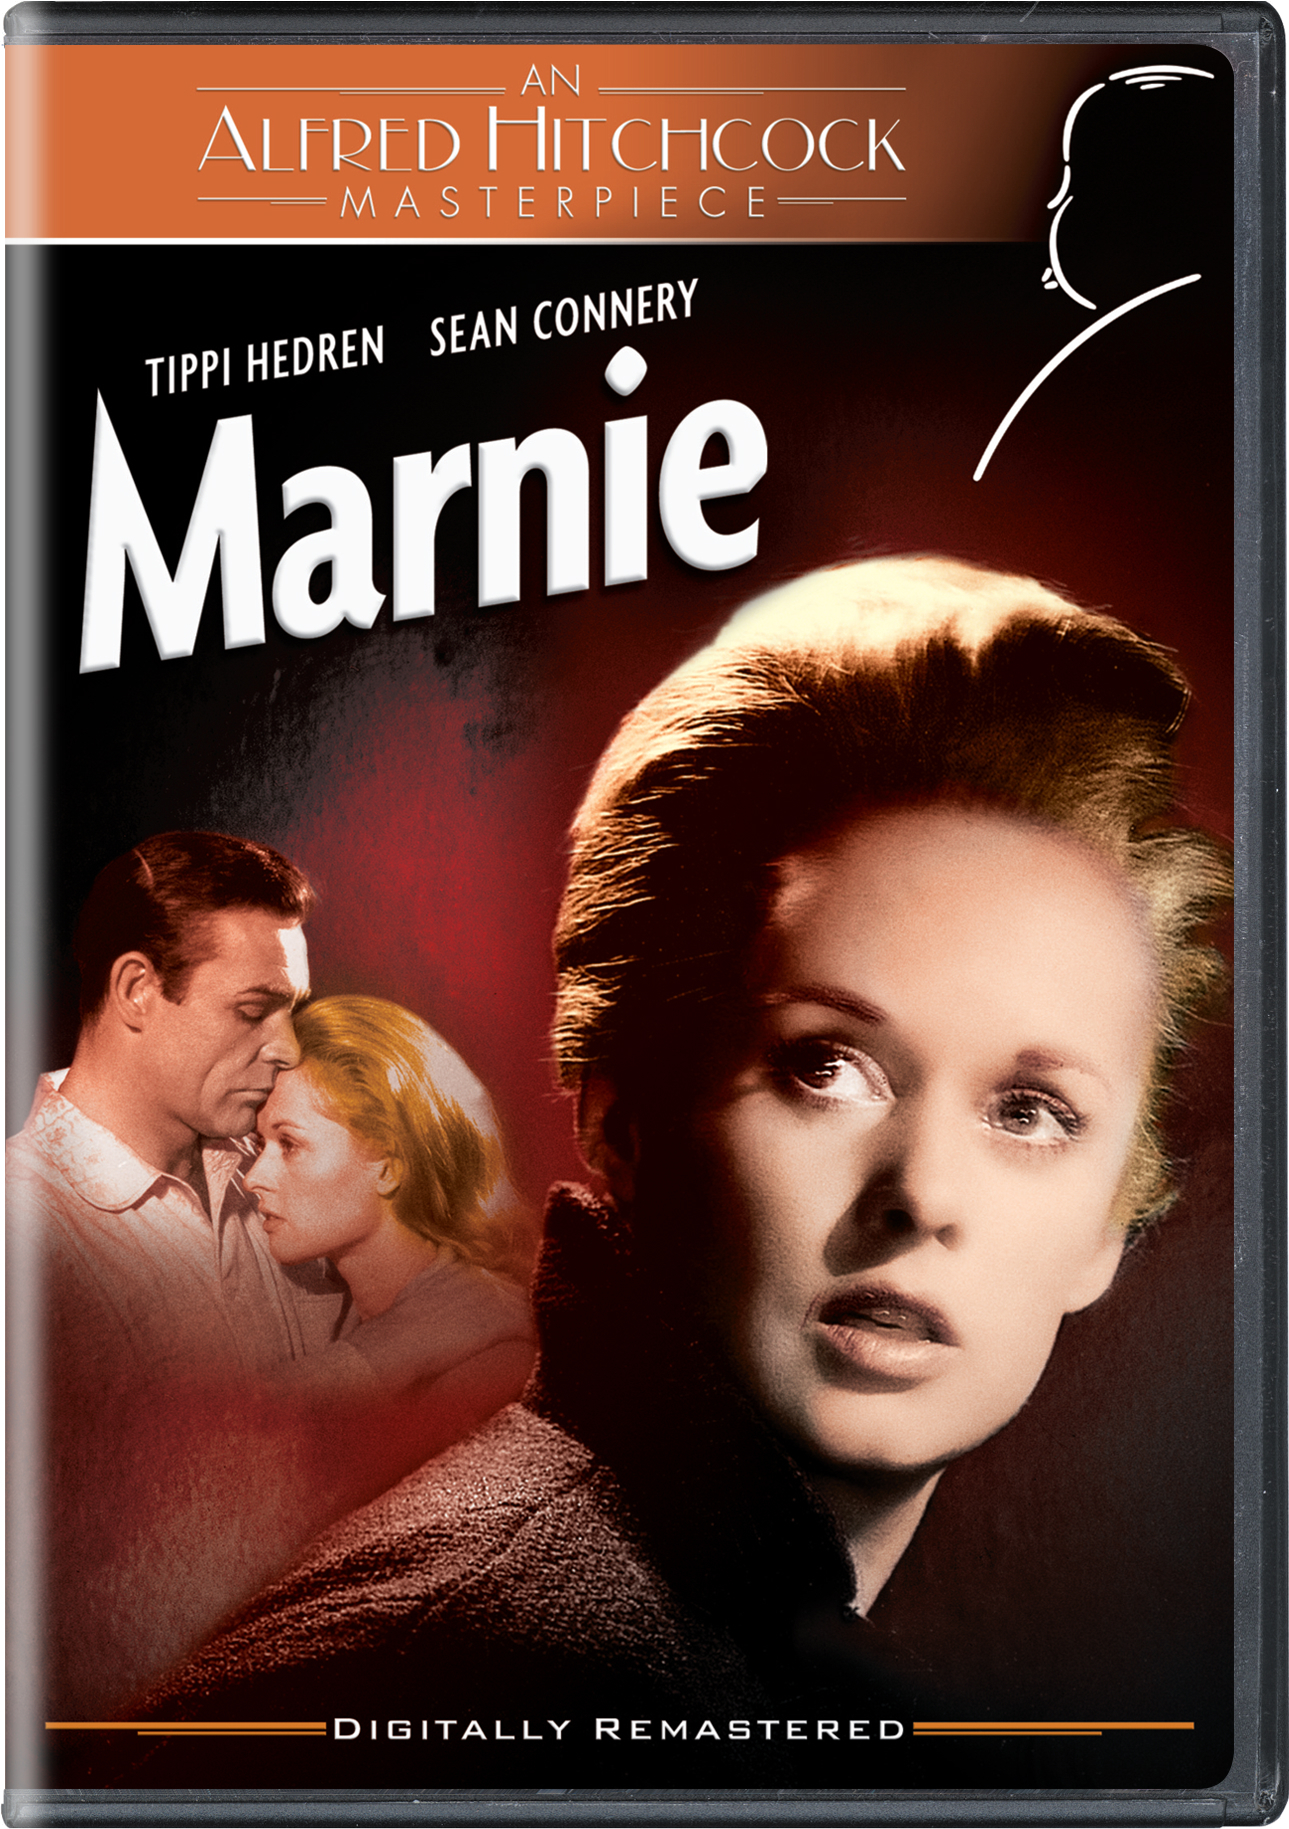 Marnie - DVD [ 1964 ]  - Modern Classic Movies On DVD - Movies On GRUV